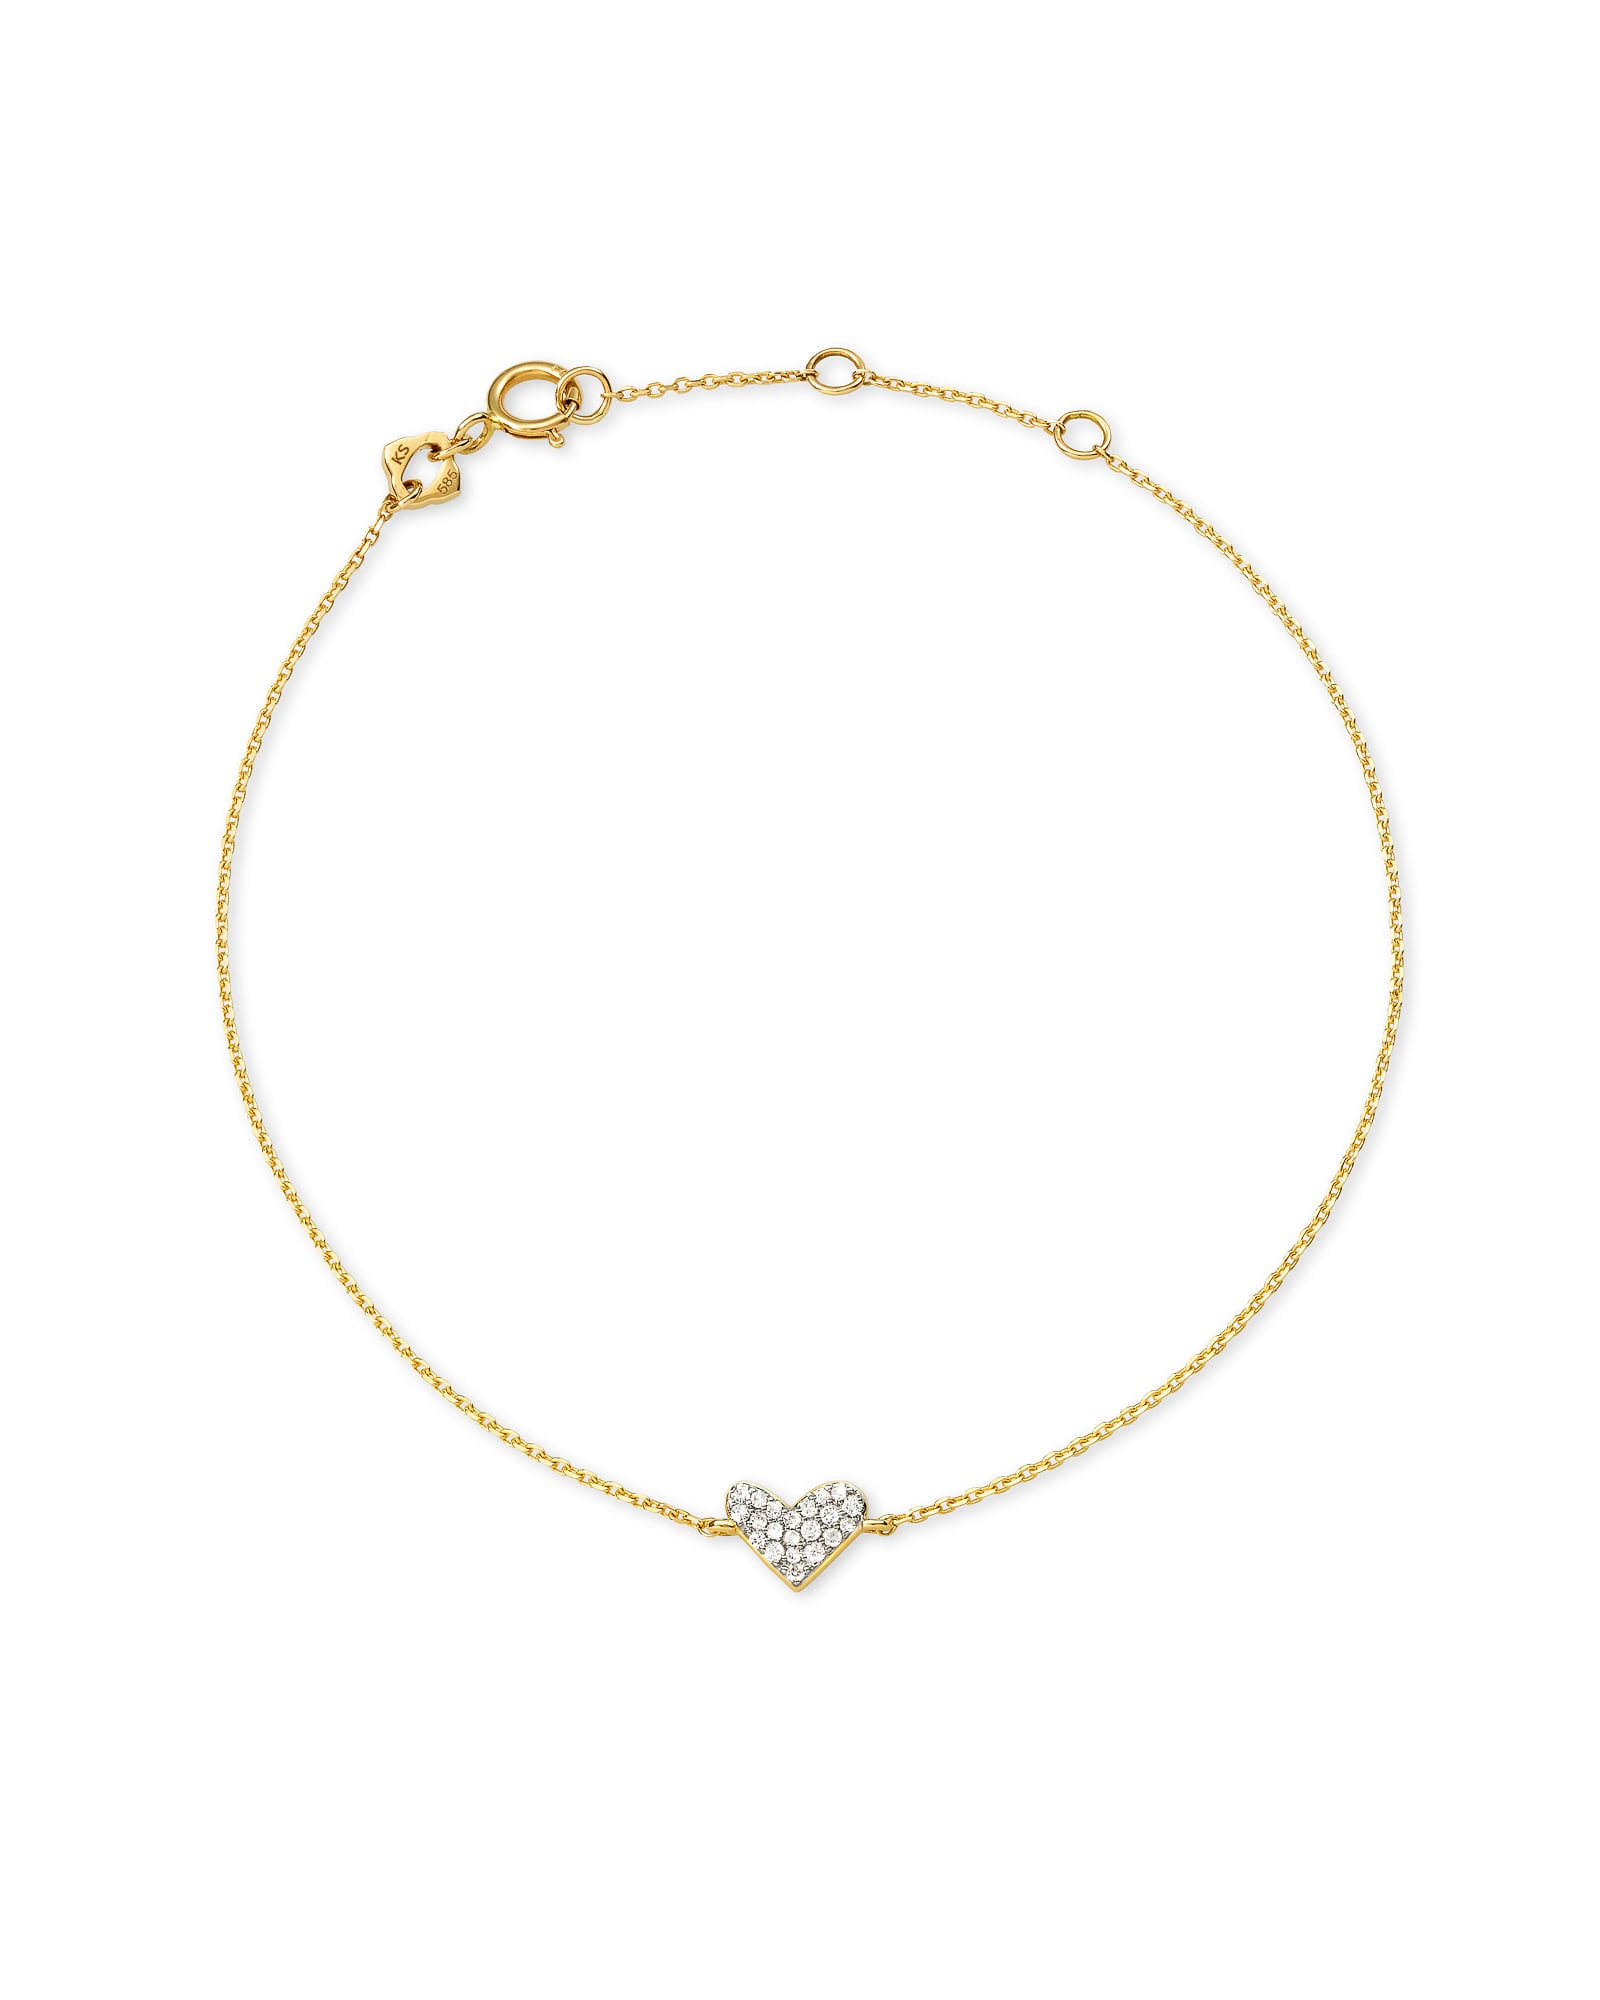 Kendra Scott Heart 14k Yellow Gold Chain Bracelet in White Diamond | Diamonds